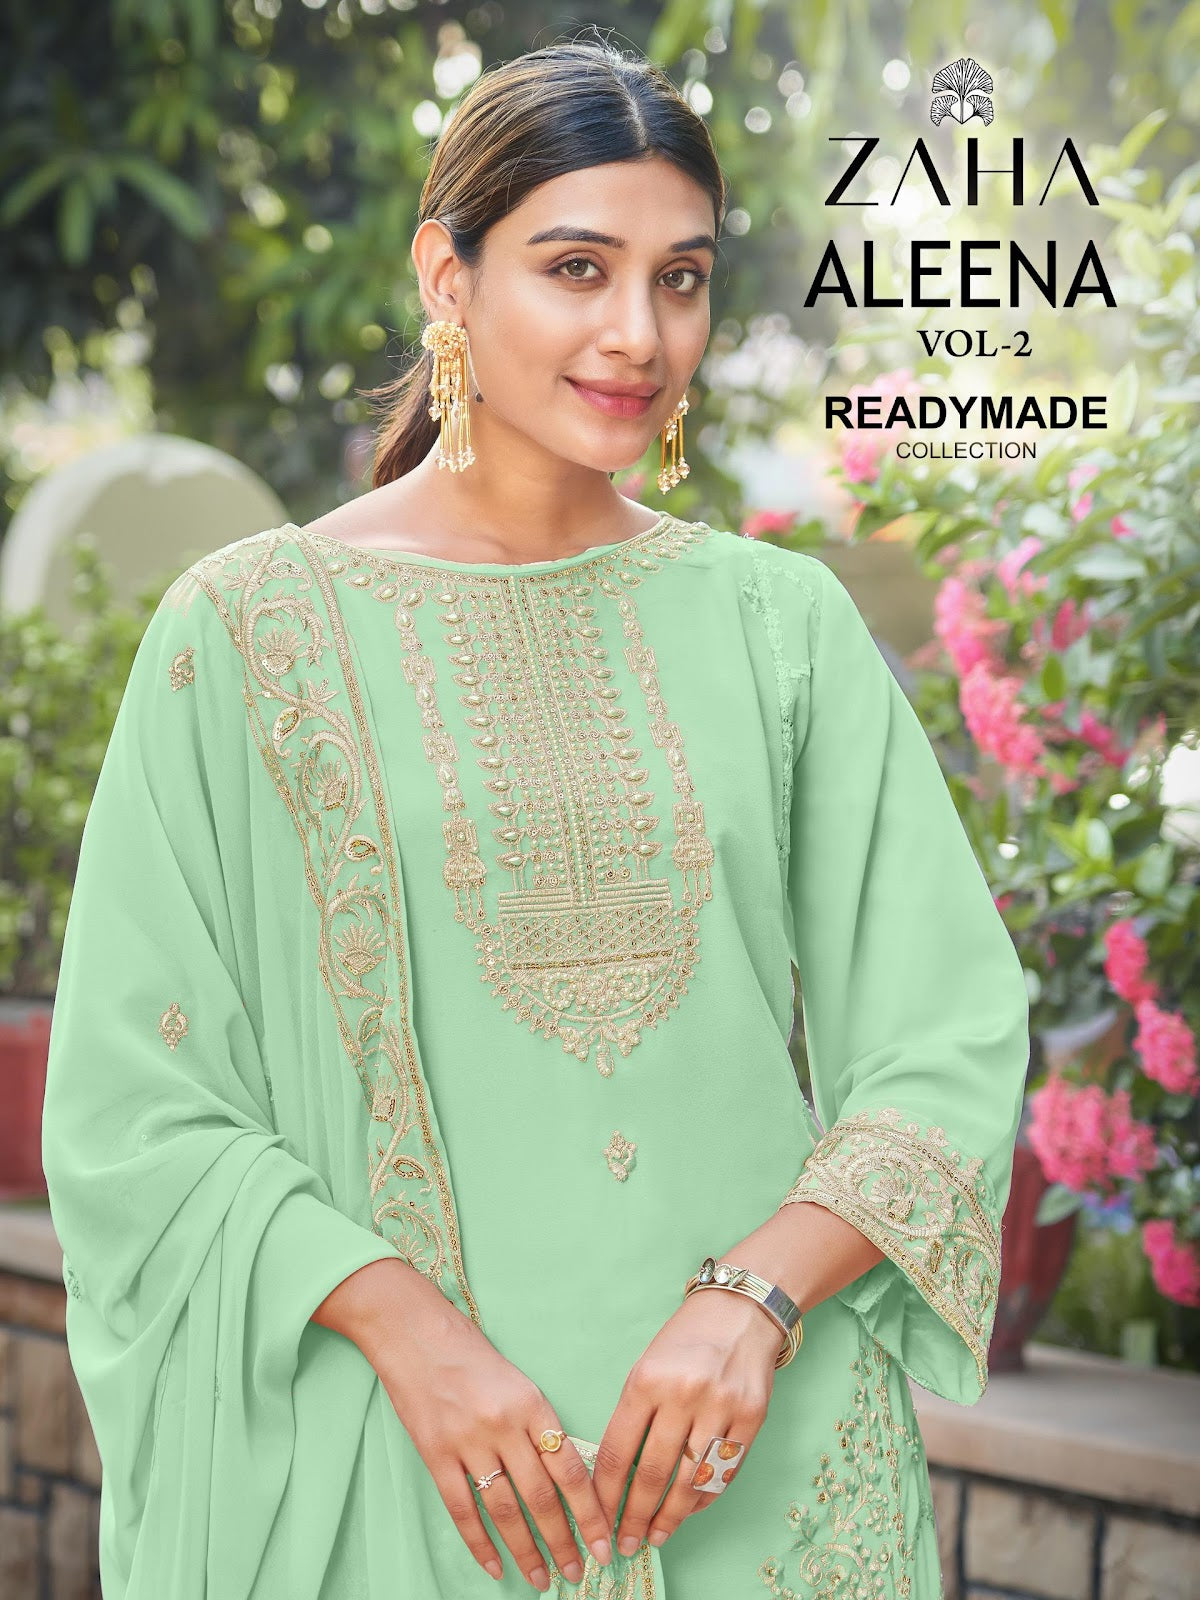 10353-Aleena Vol 2 Zaha Fox Georgette Pakistani Readymade Suits Exporter Gujarat